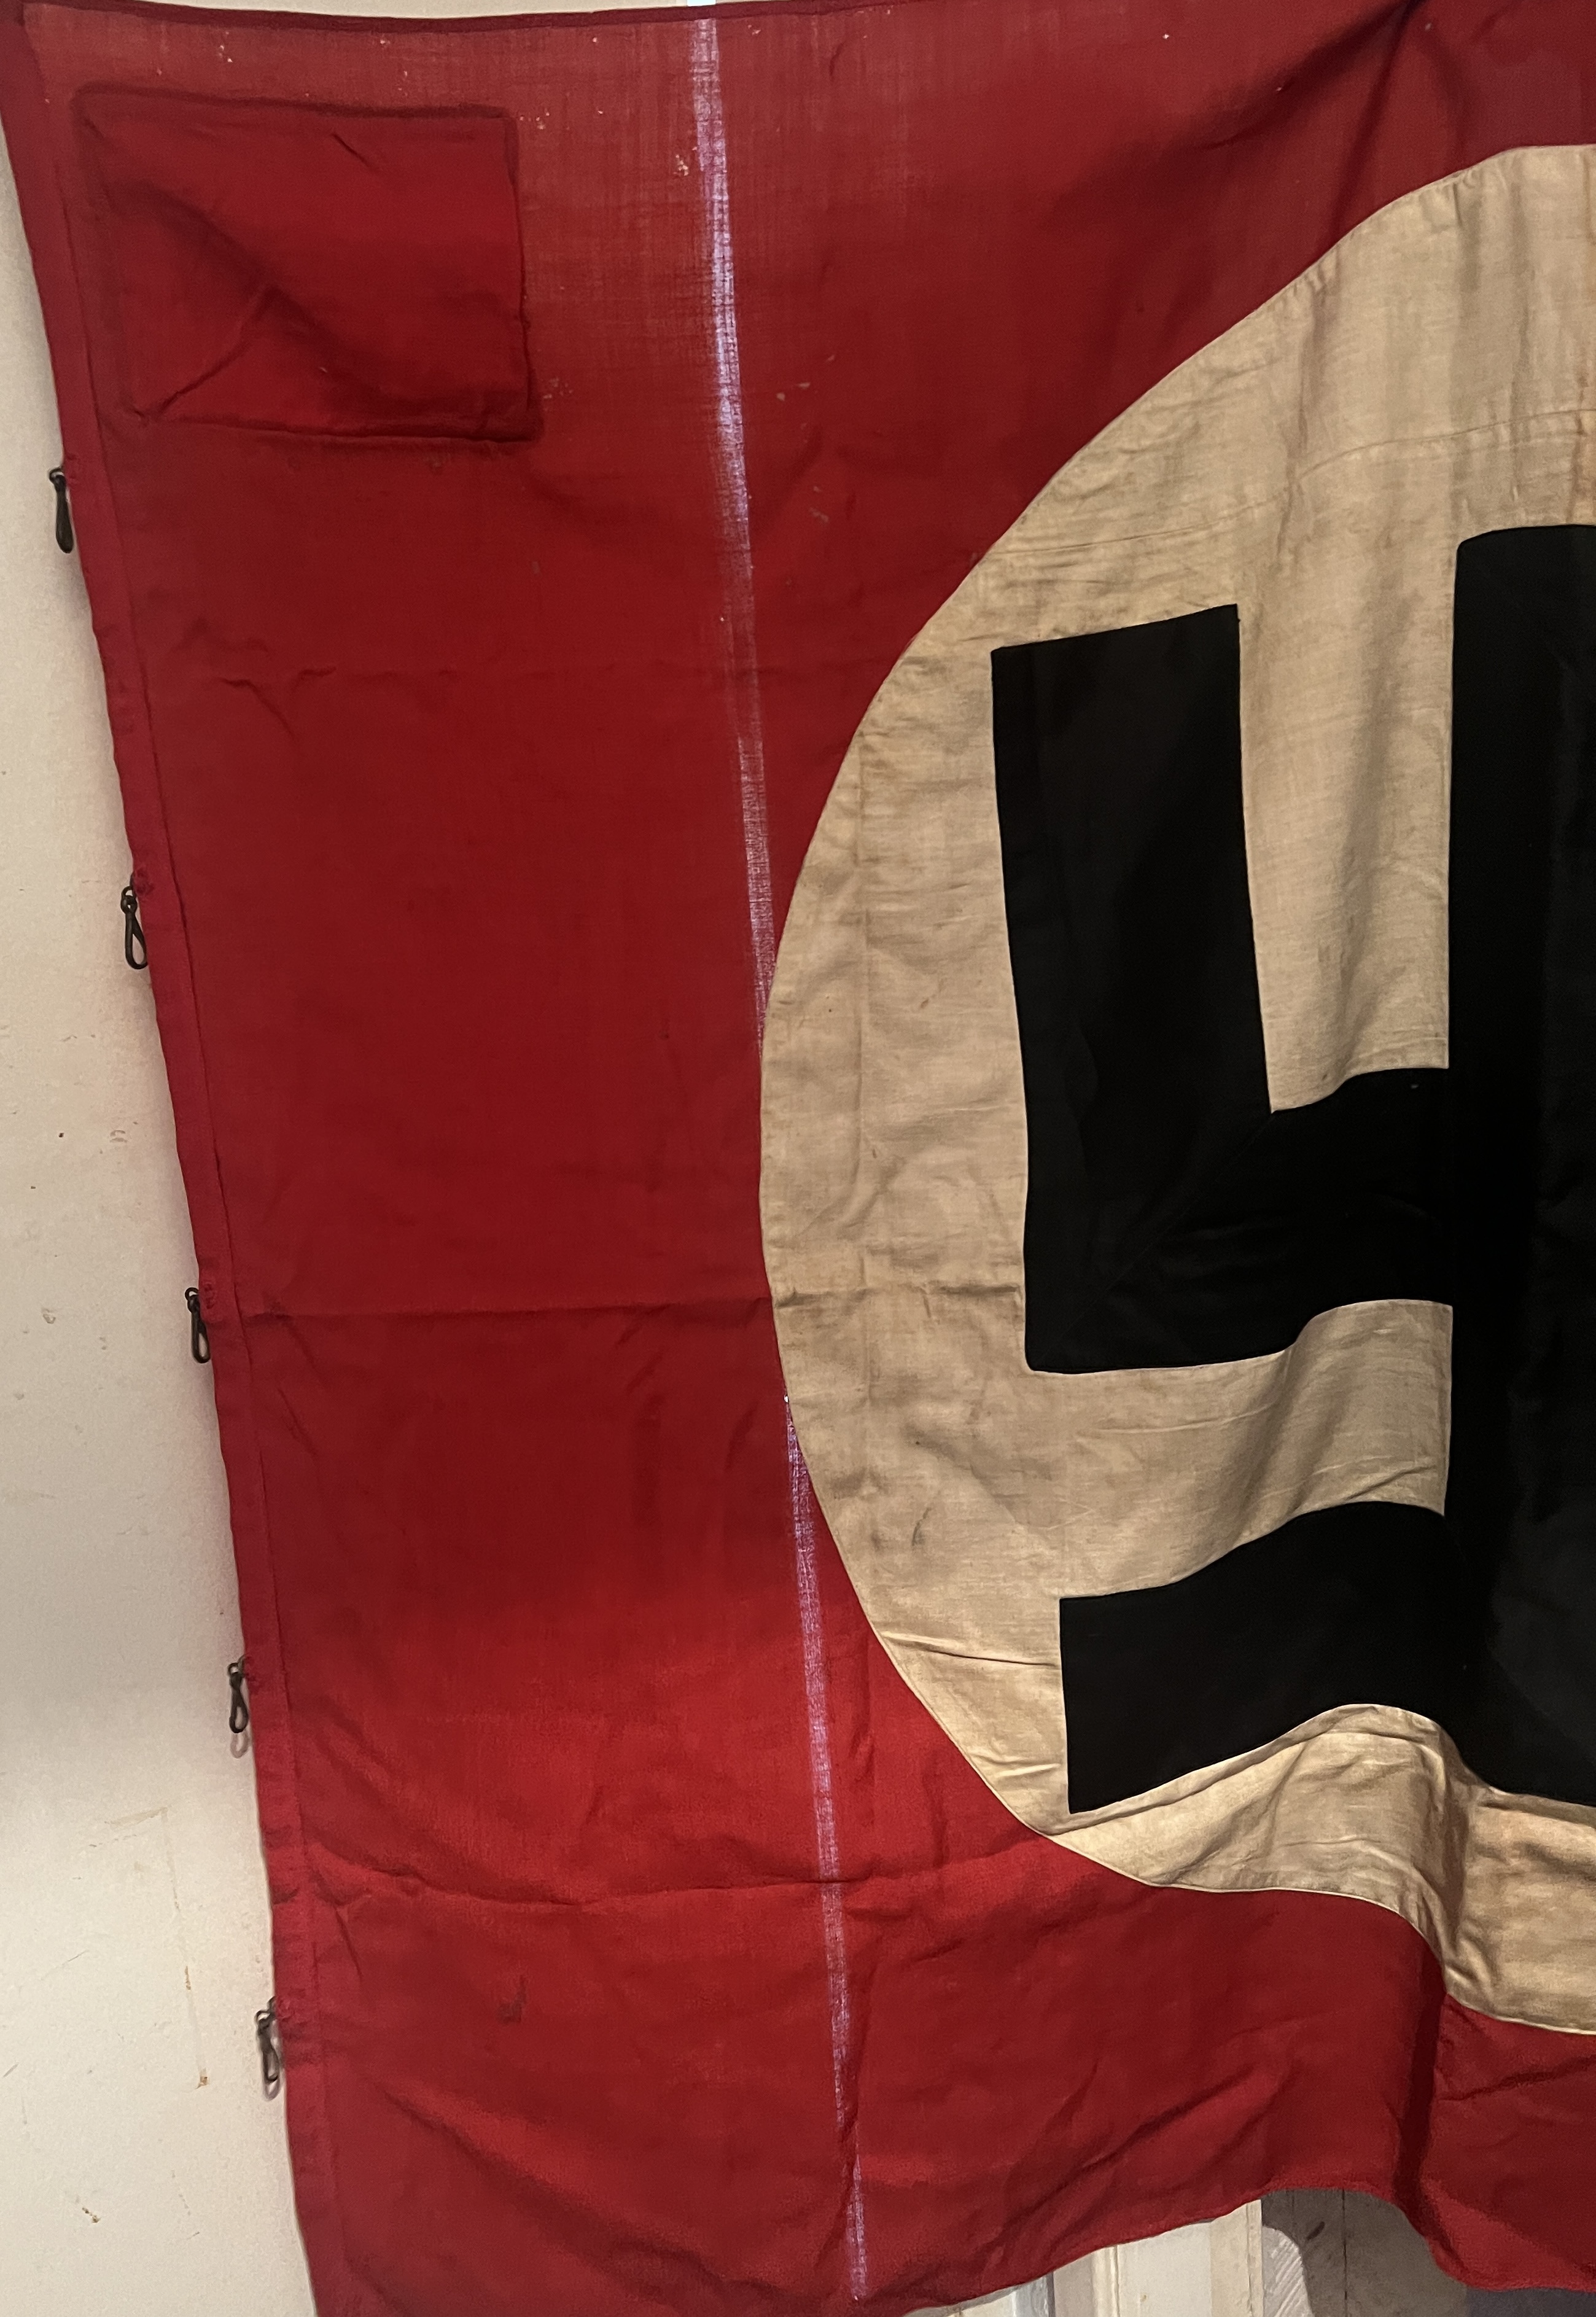 large black swastika within white circle upon red background